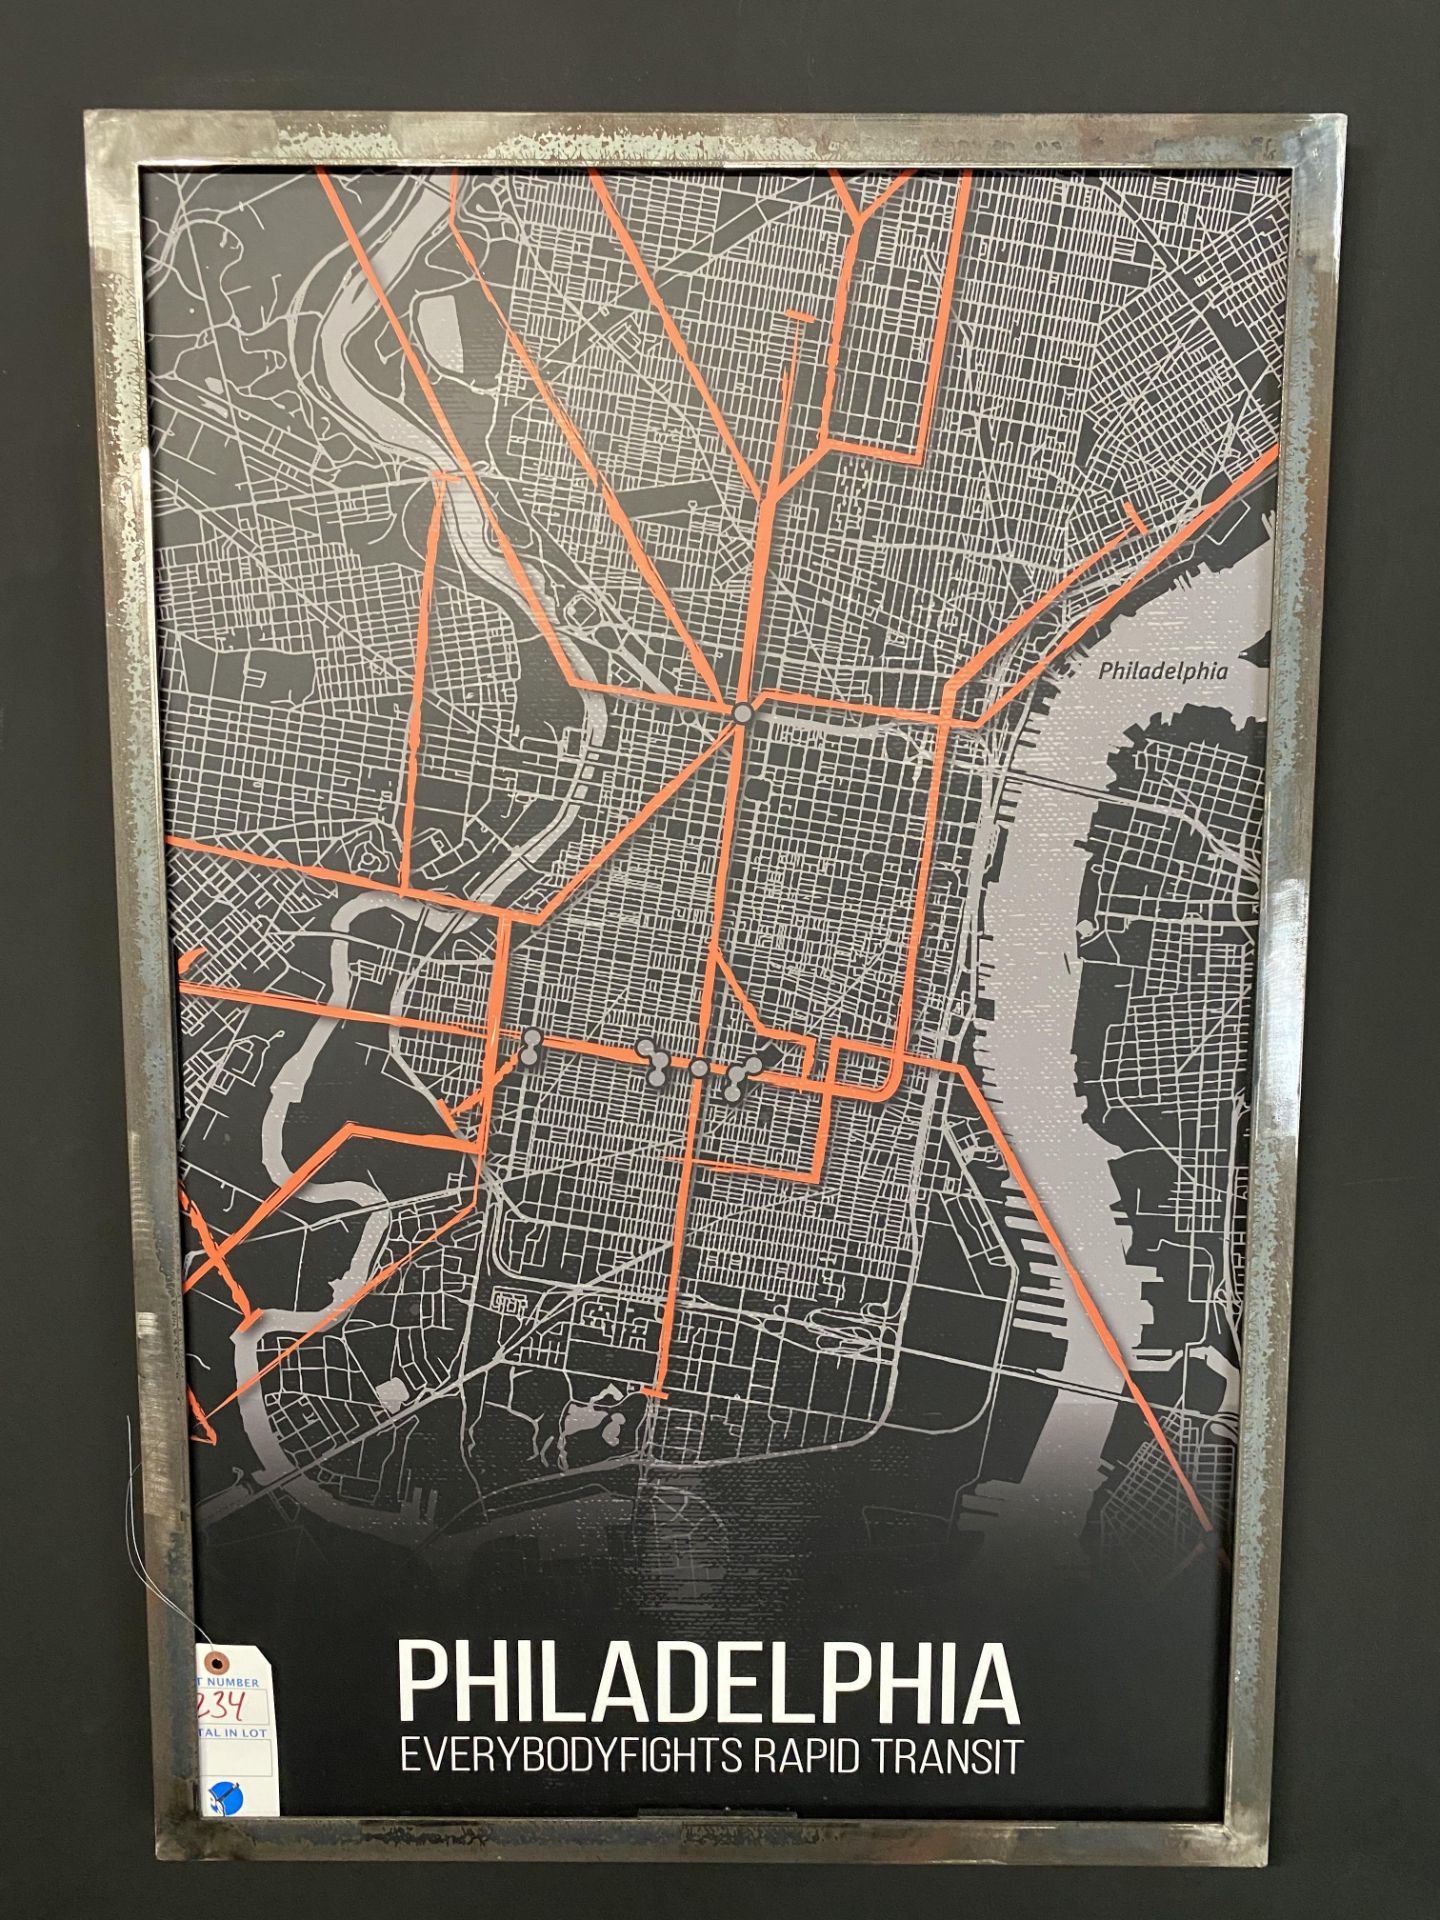 Everybody Fights Philadelphia Rapid Transit in Metal Industrial Frame 24W x 36"H - Image 2 of 2